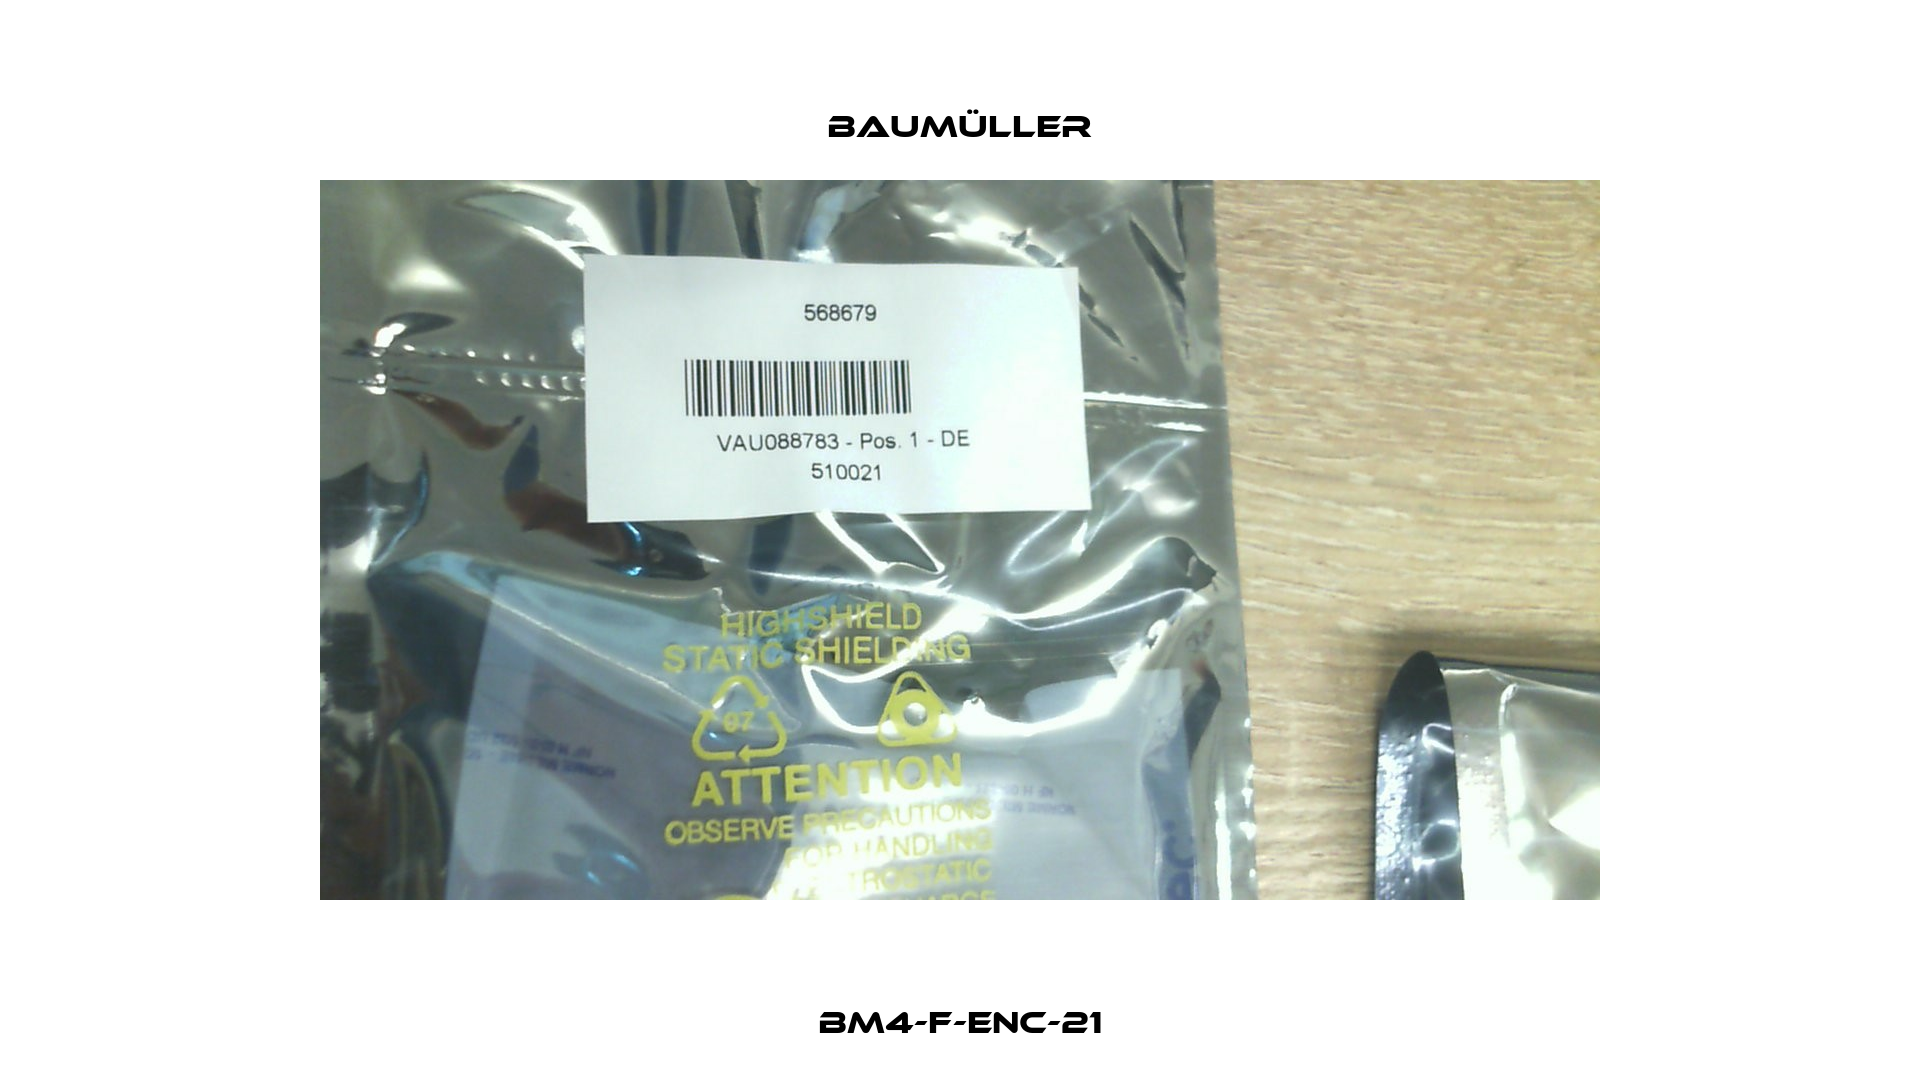 BM4-F-ENC-21 Baumüller